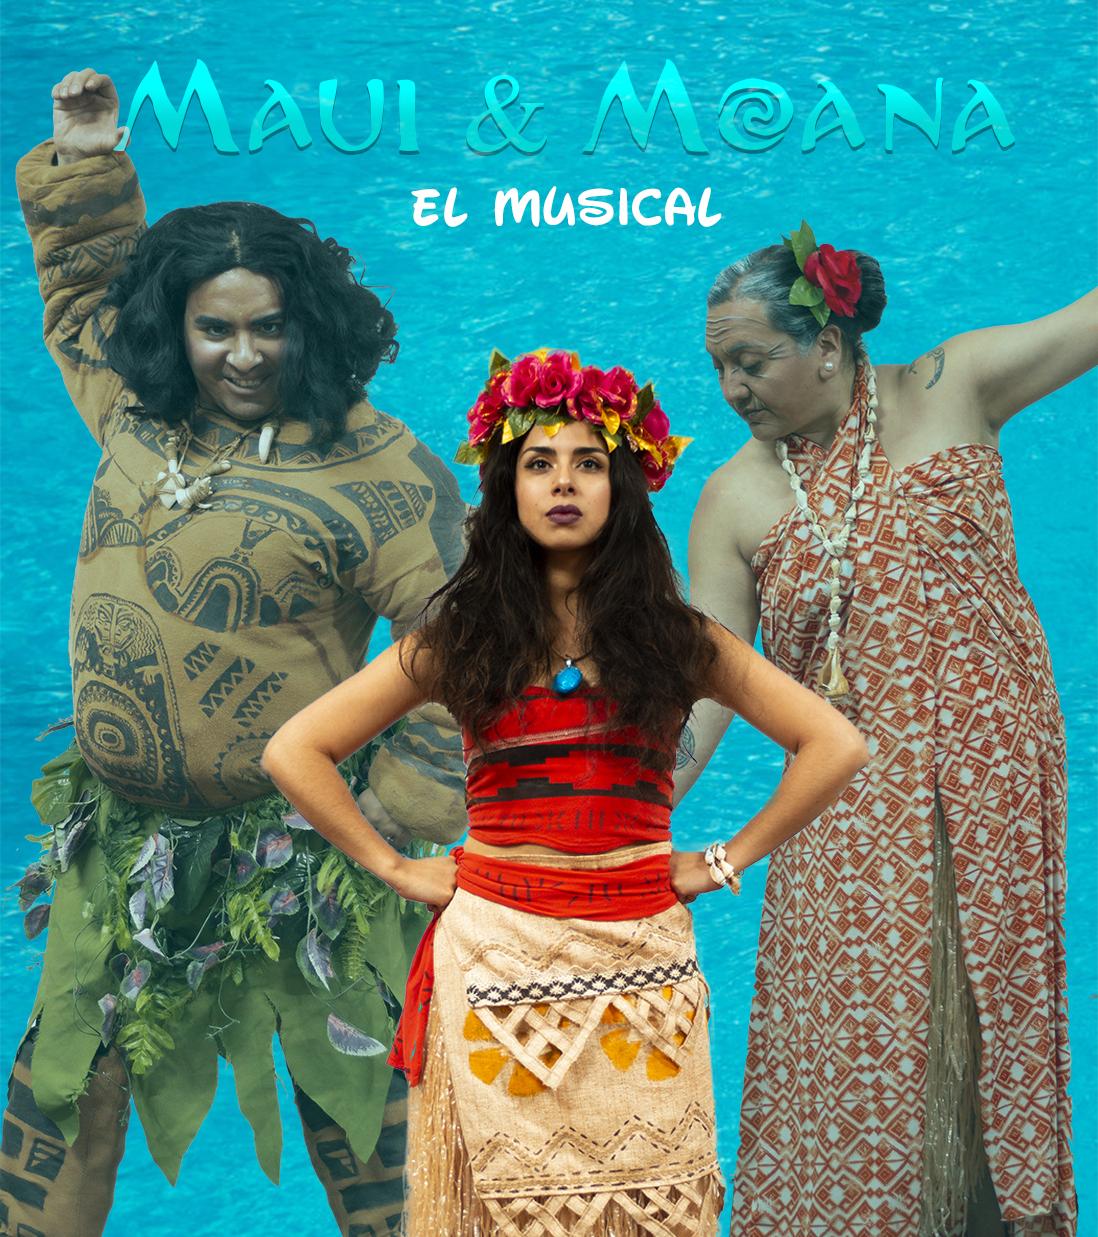 Maui & Moana, el Musical